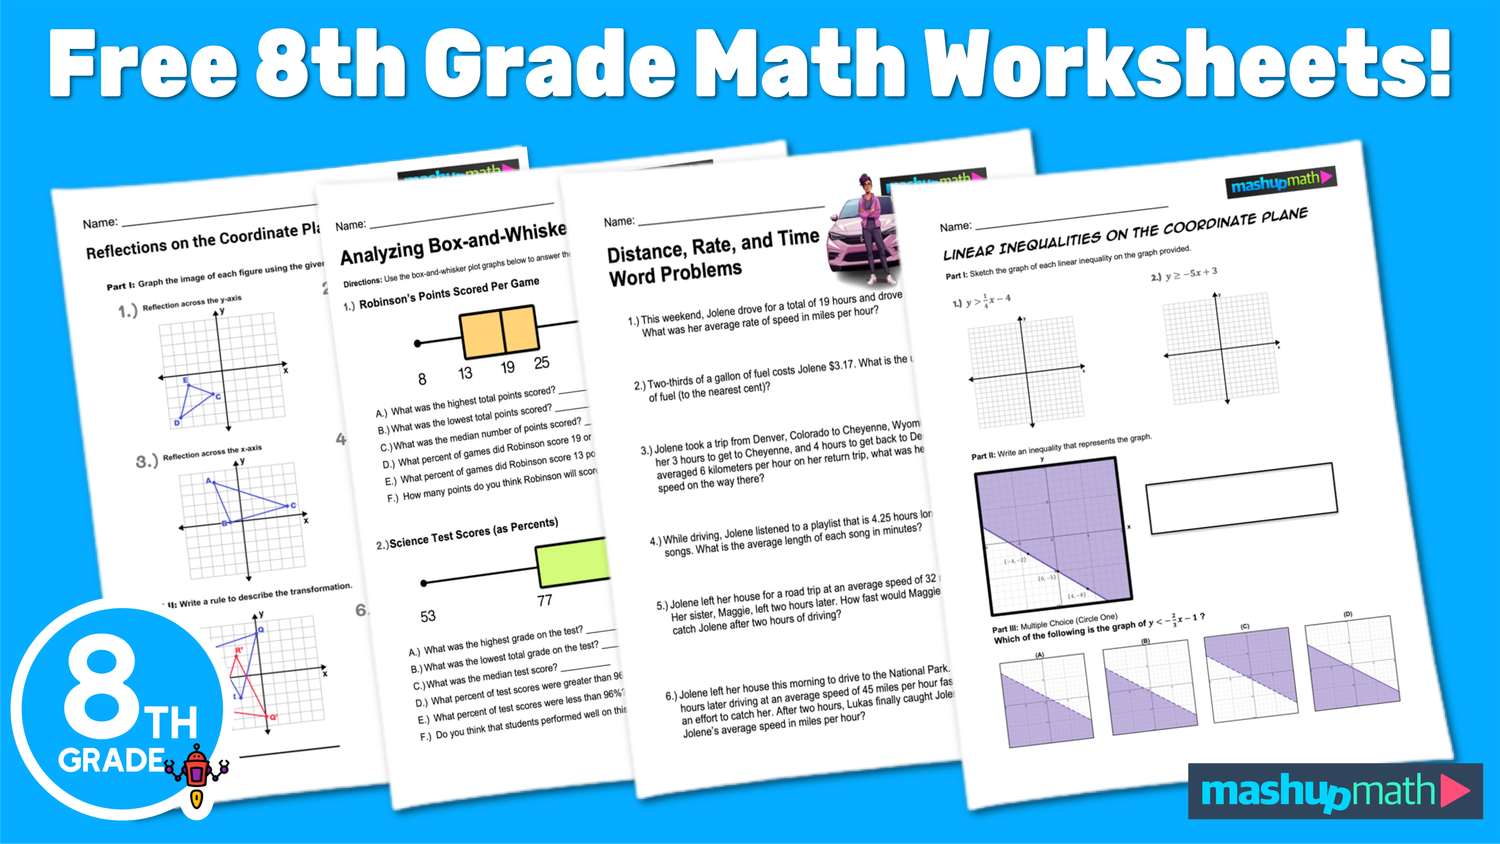 Drawing Speed-Time Graphs Worksheet  Fun and Engaging 8th Grade PDF  Worksheets